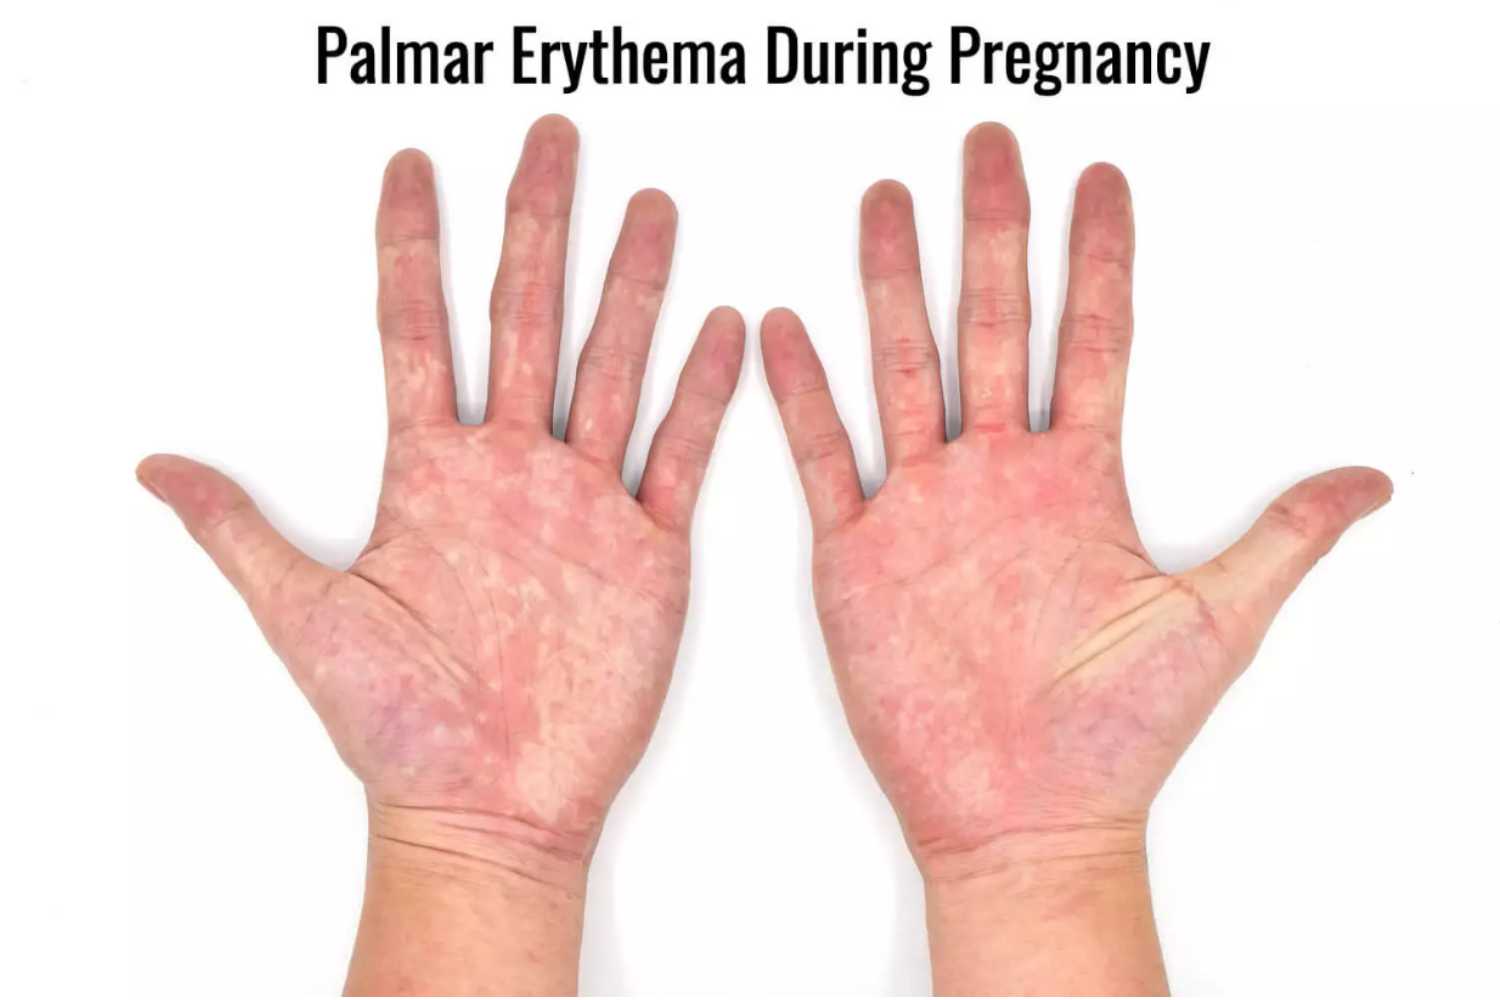 Palmar Erythema during pregnancy